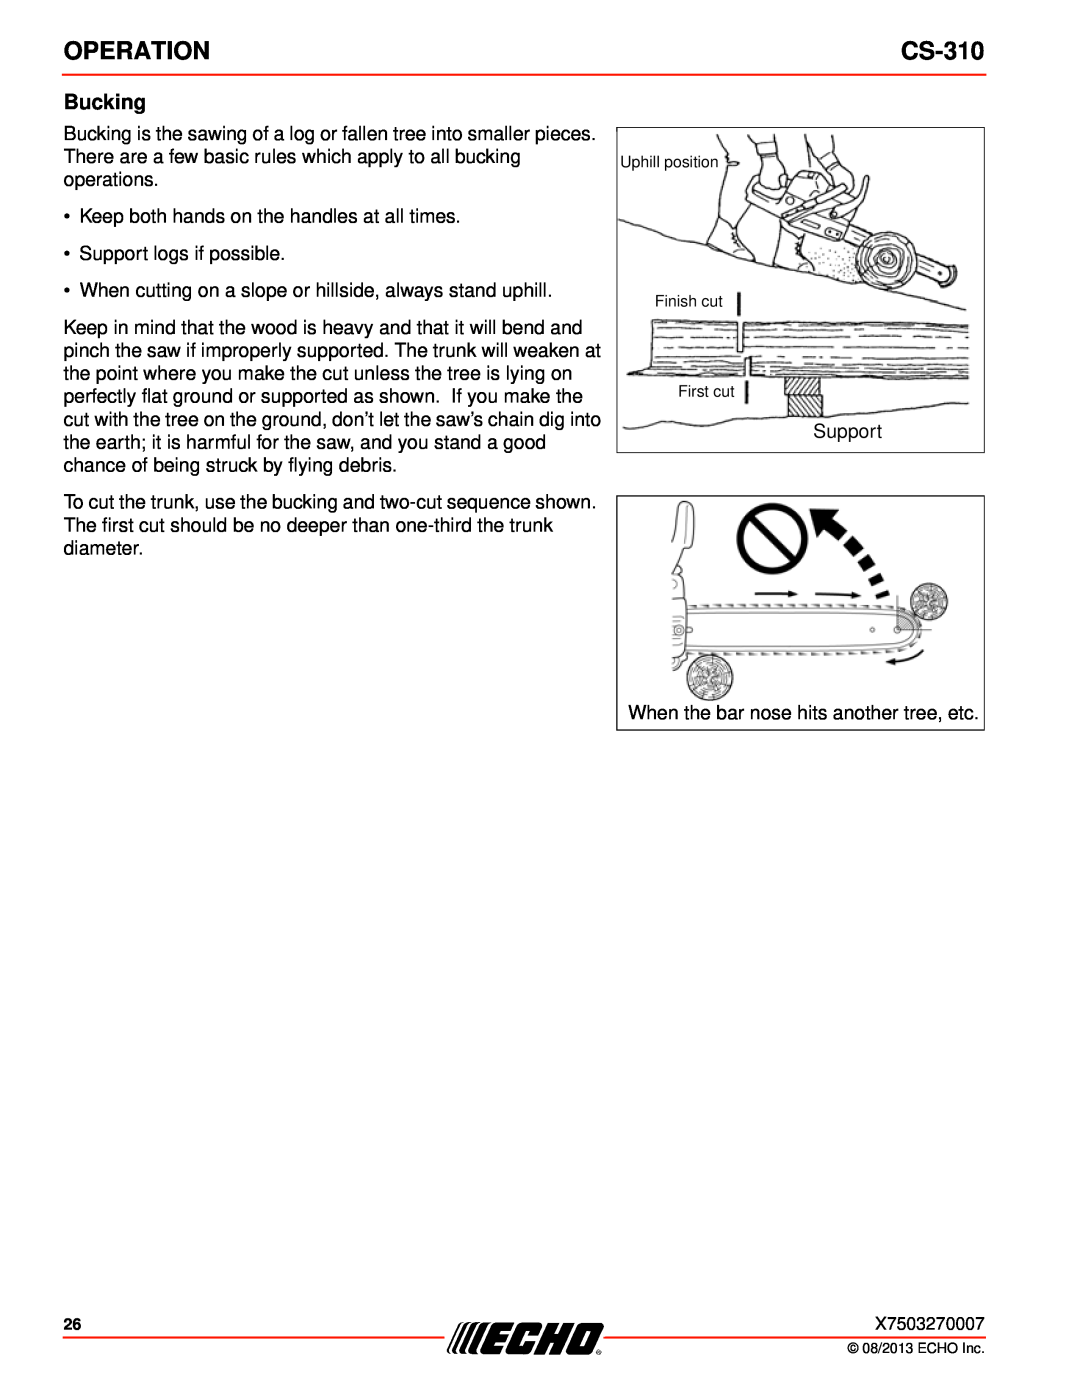 Echo CS-310 instruction manual Bucking, Operation 